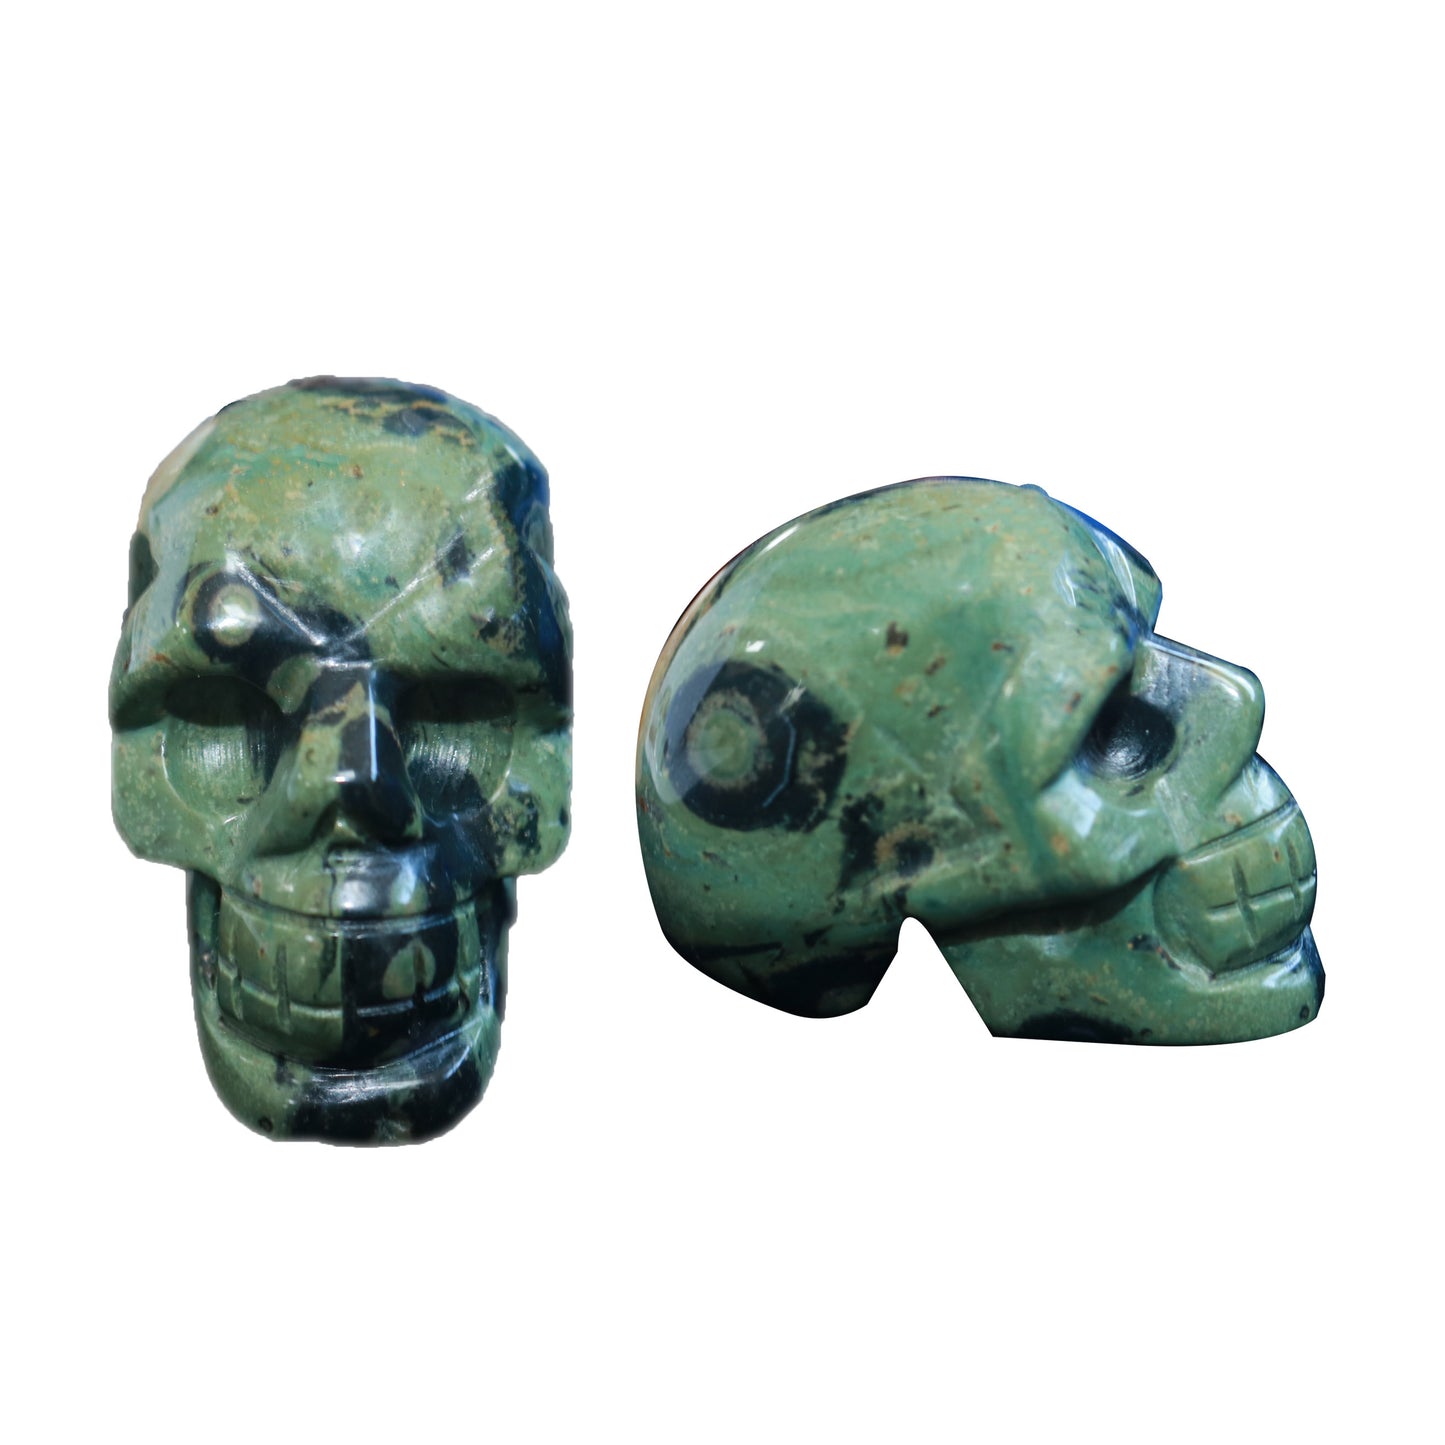 Skull Carvings-2 Inch